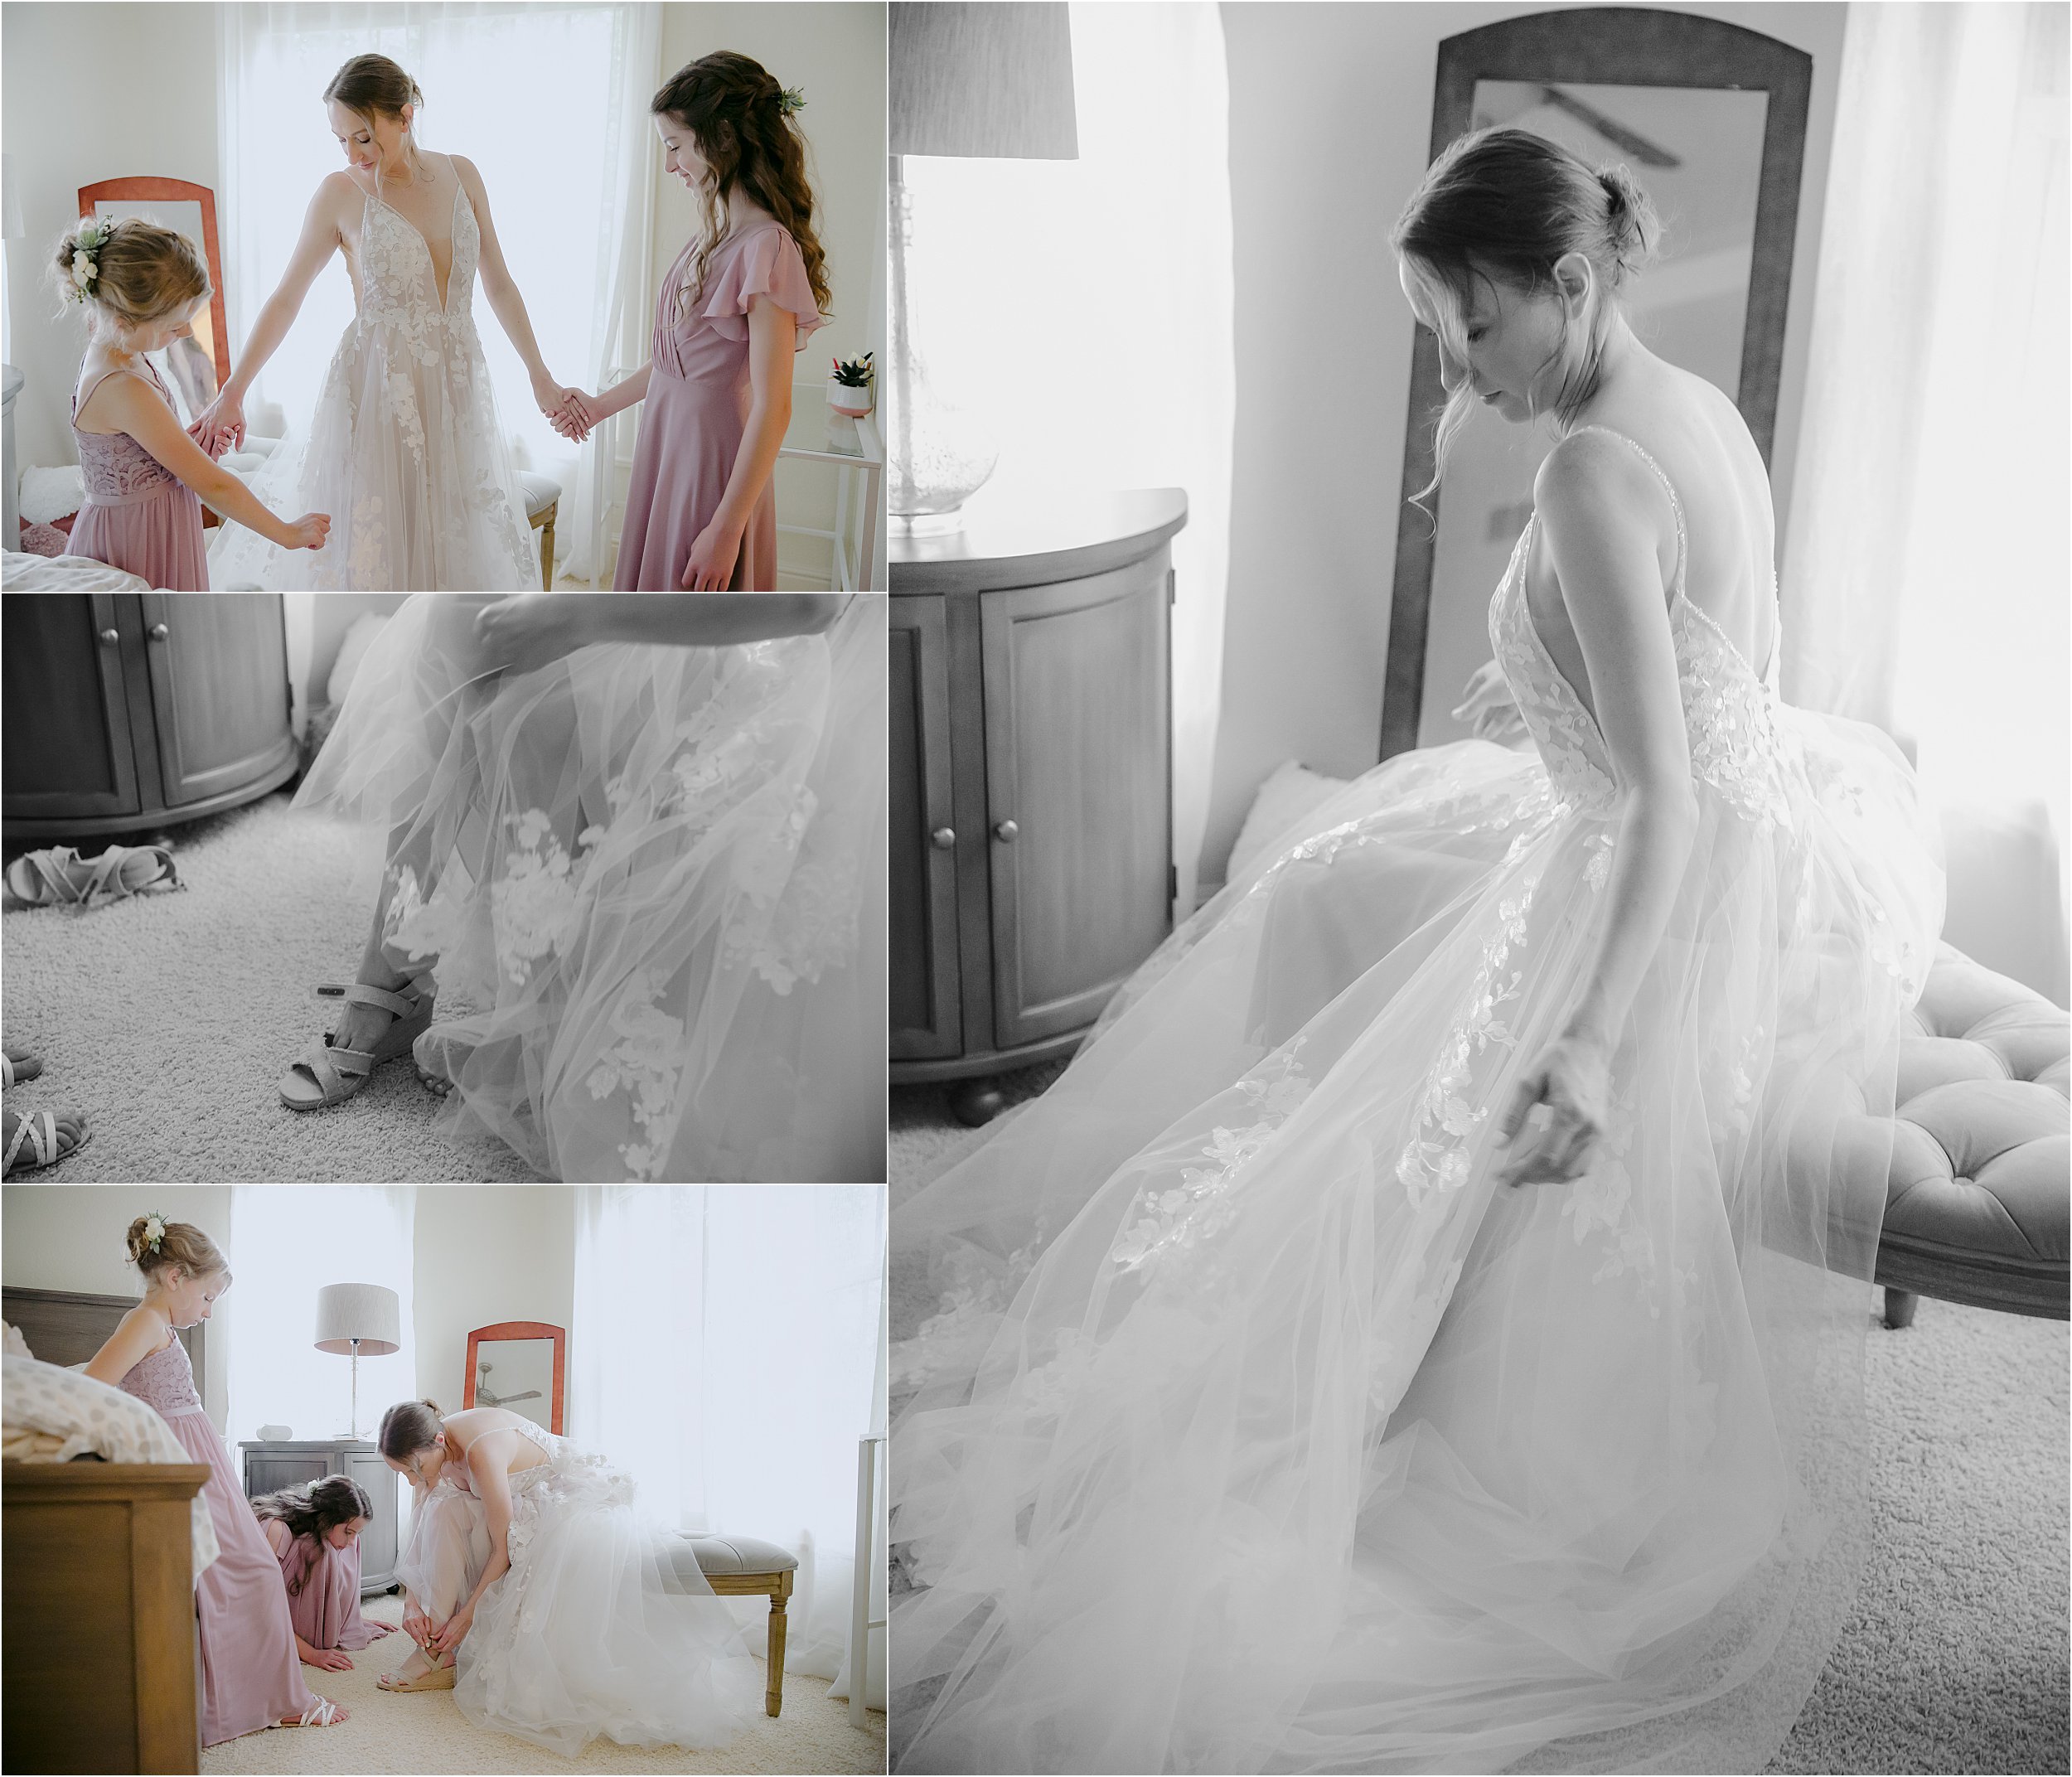 04-mom-daughters-getting-ready-wedding-day.JPG